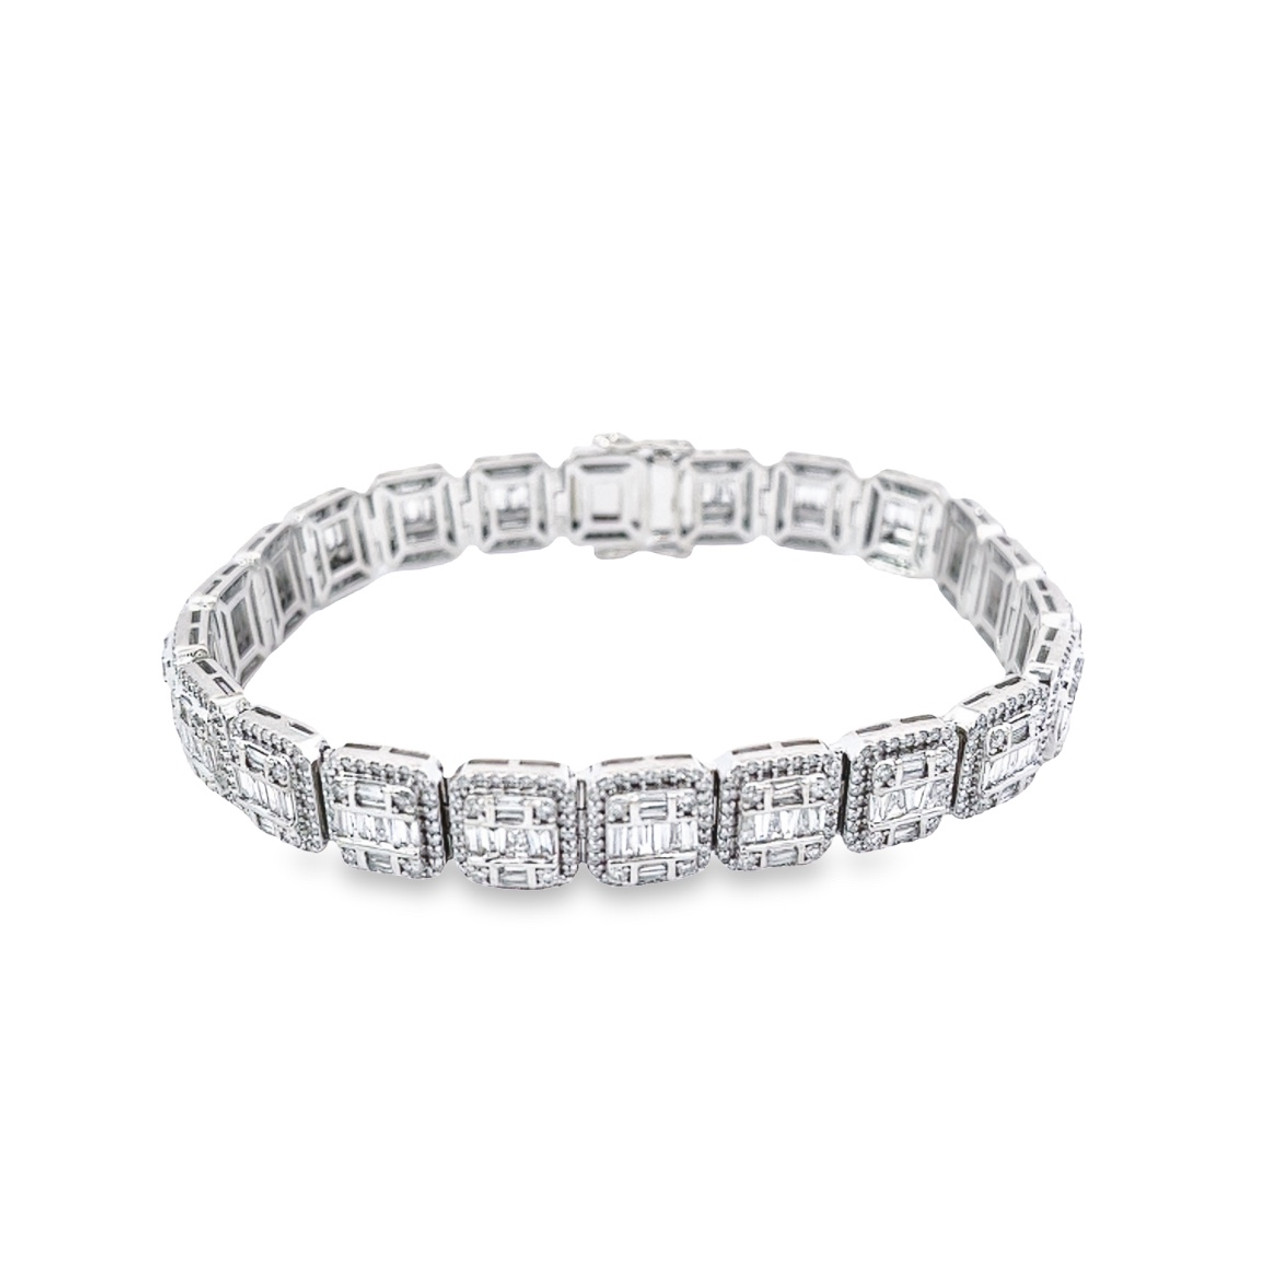 Buy Baguette diamond bracelet from Pasha Fine Jewelry